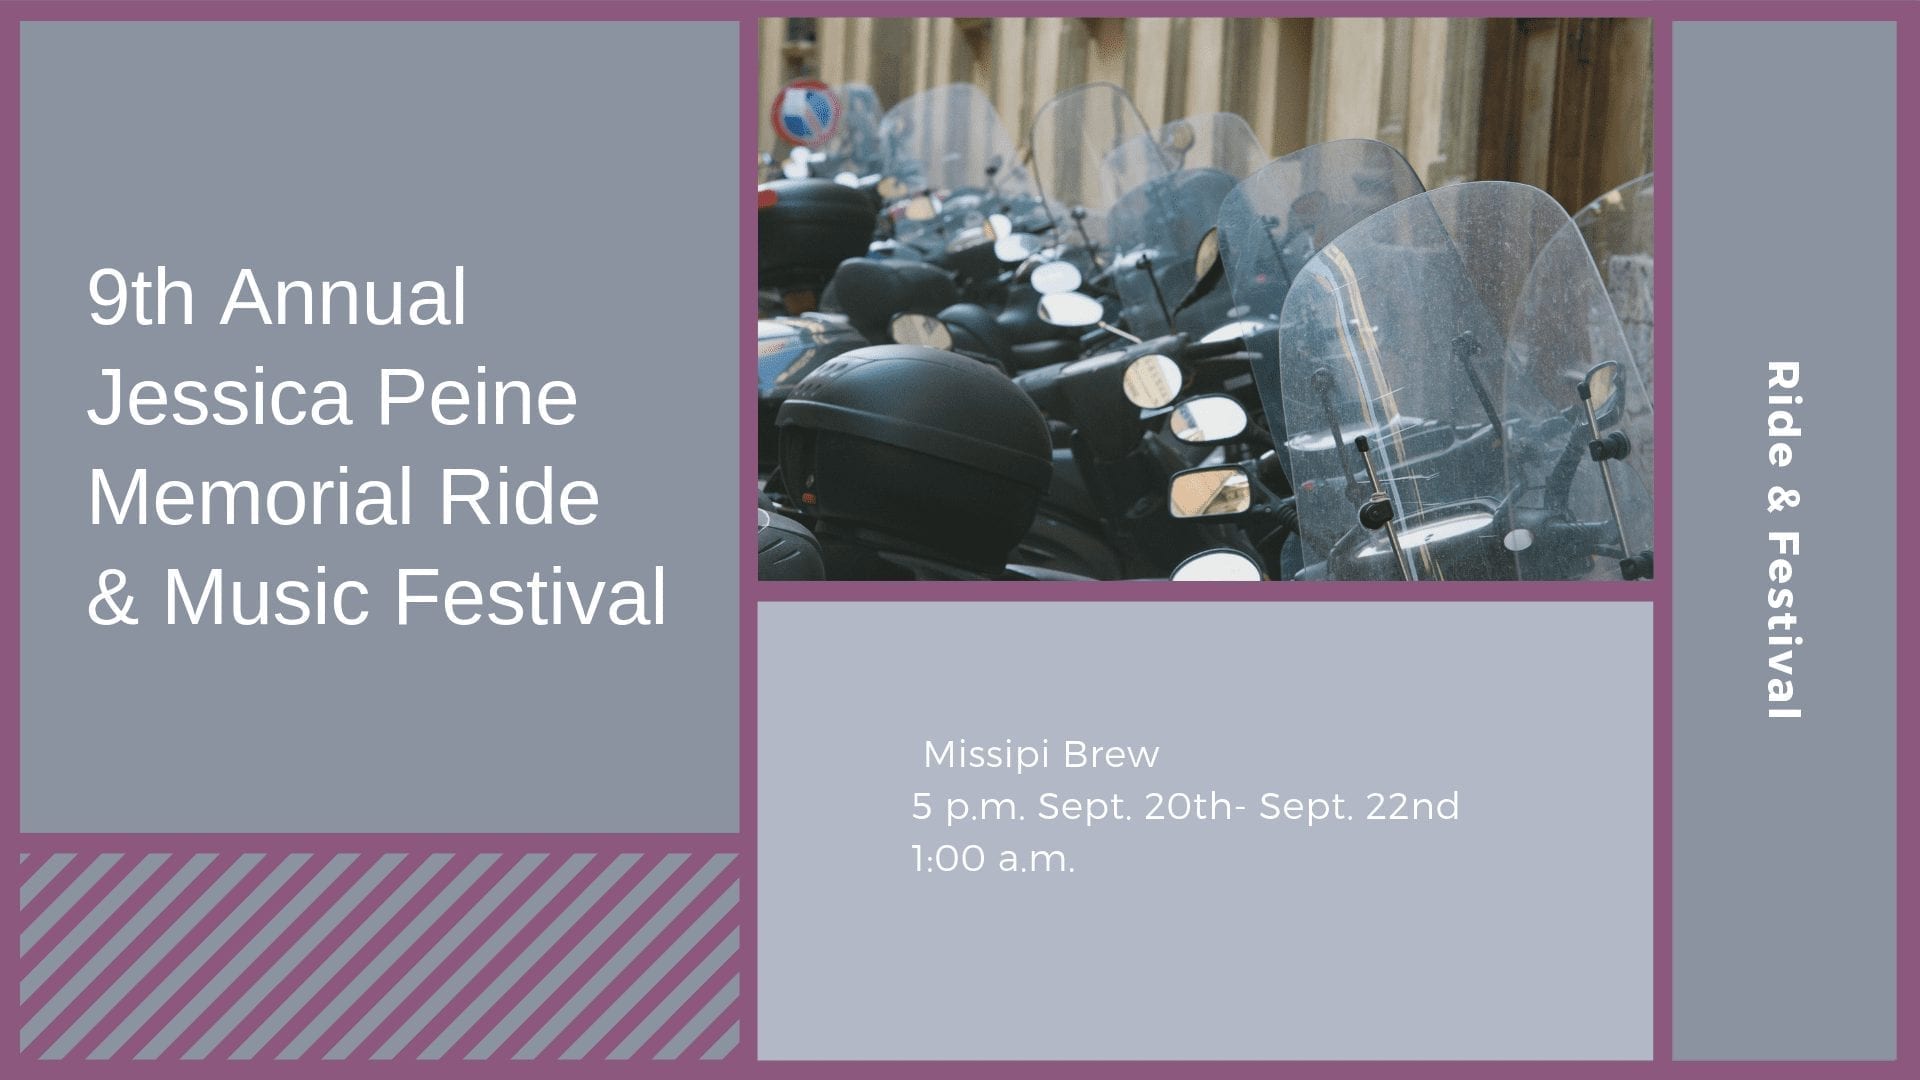 9th Annual Jessica Peine Memorial Ride & Music Festival